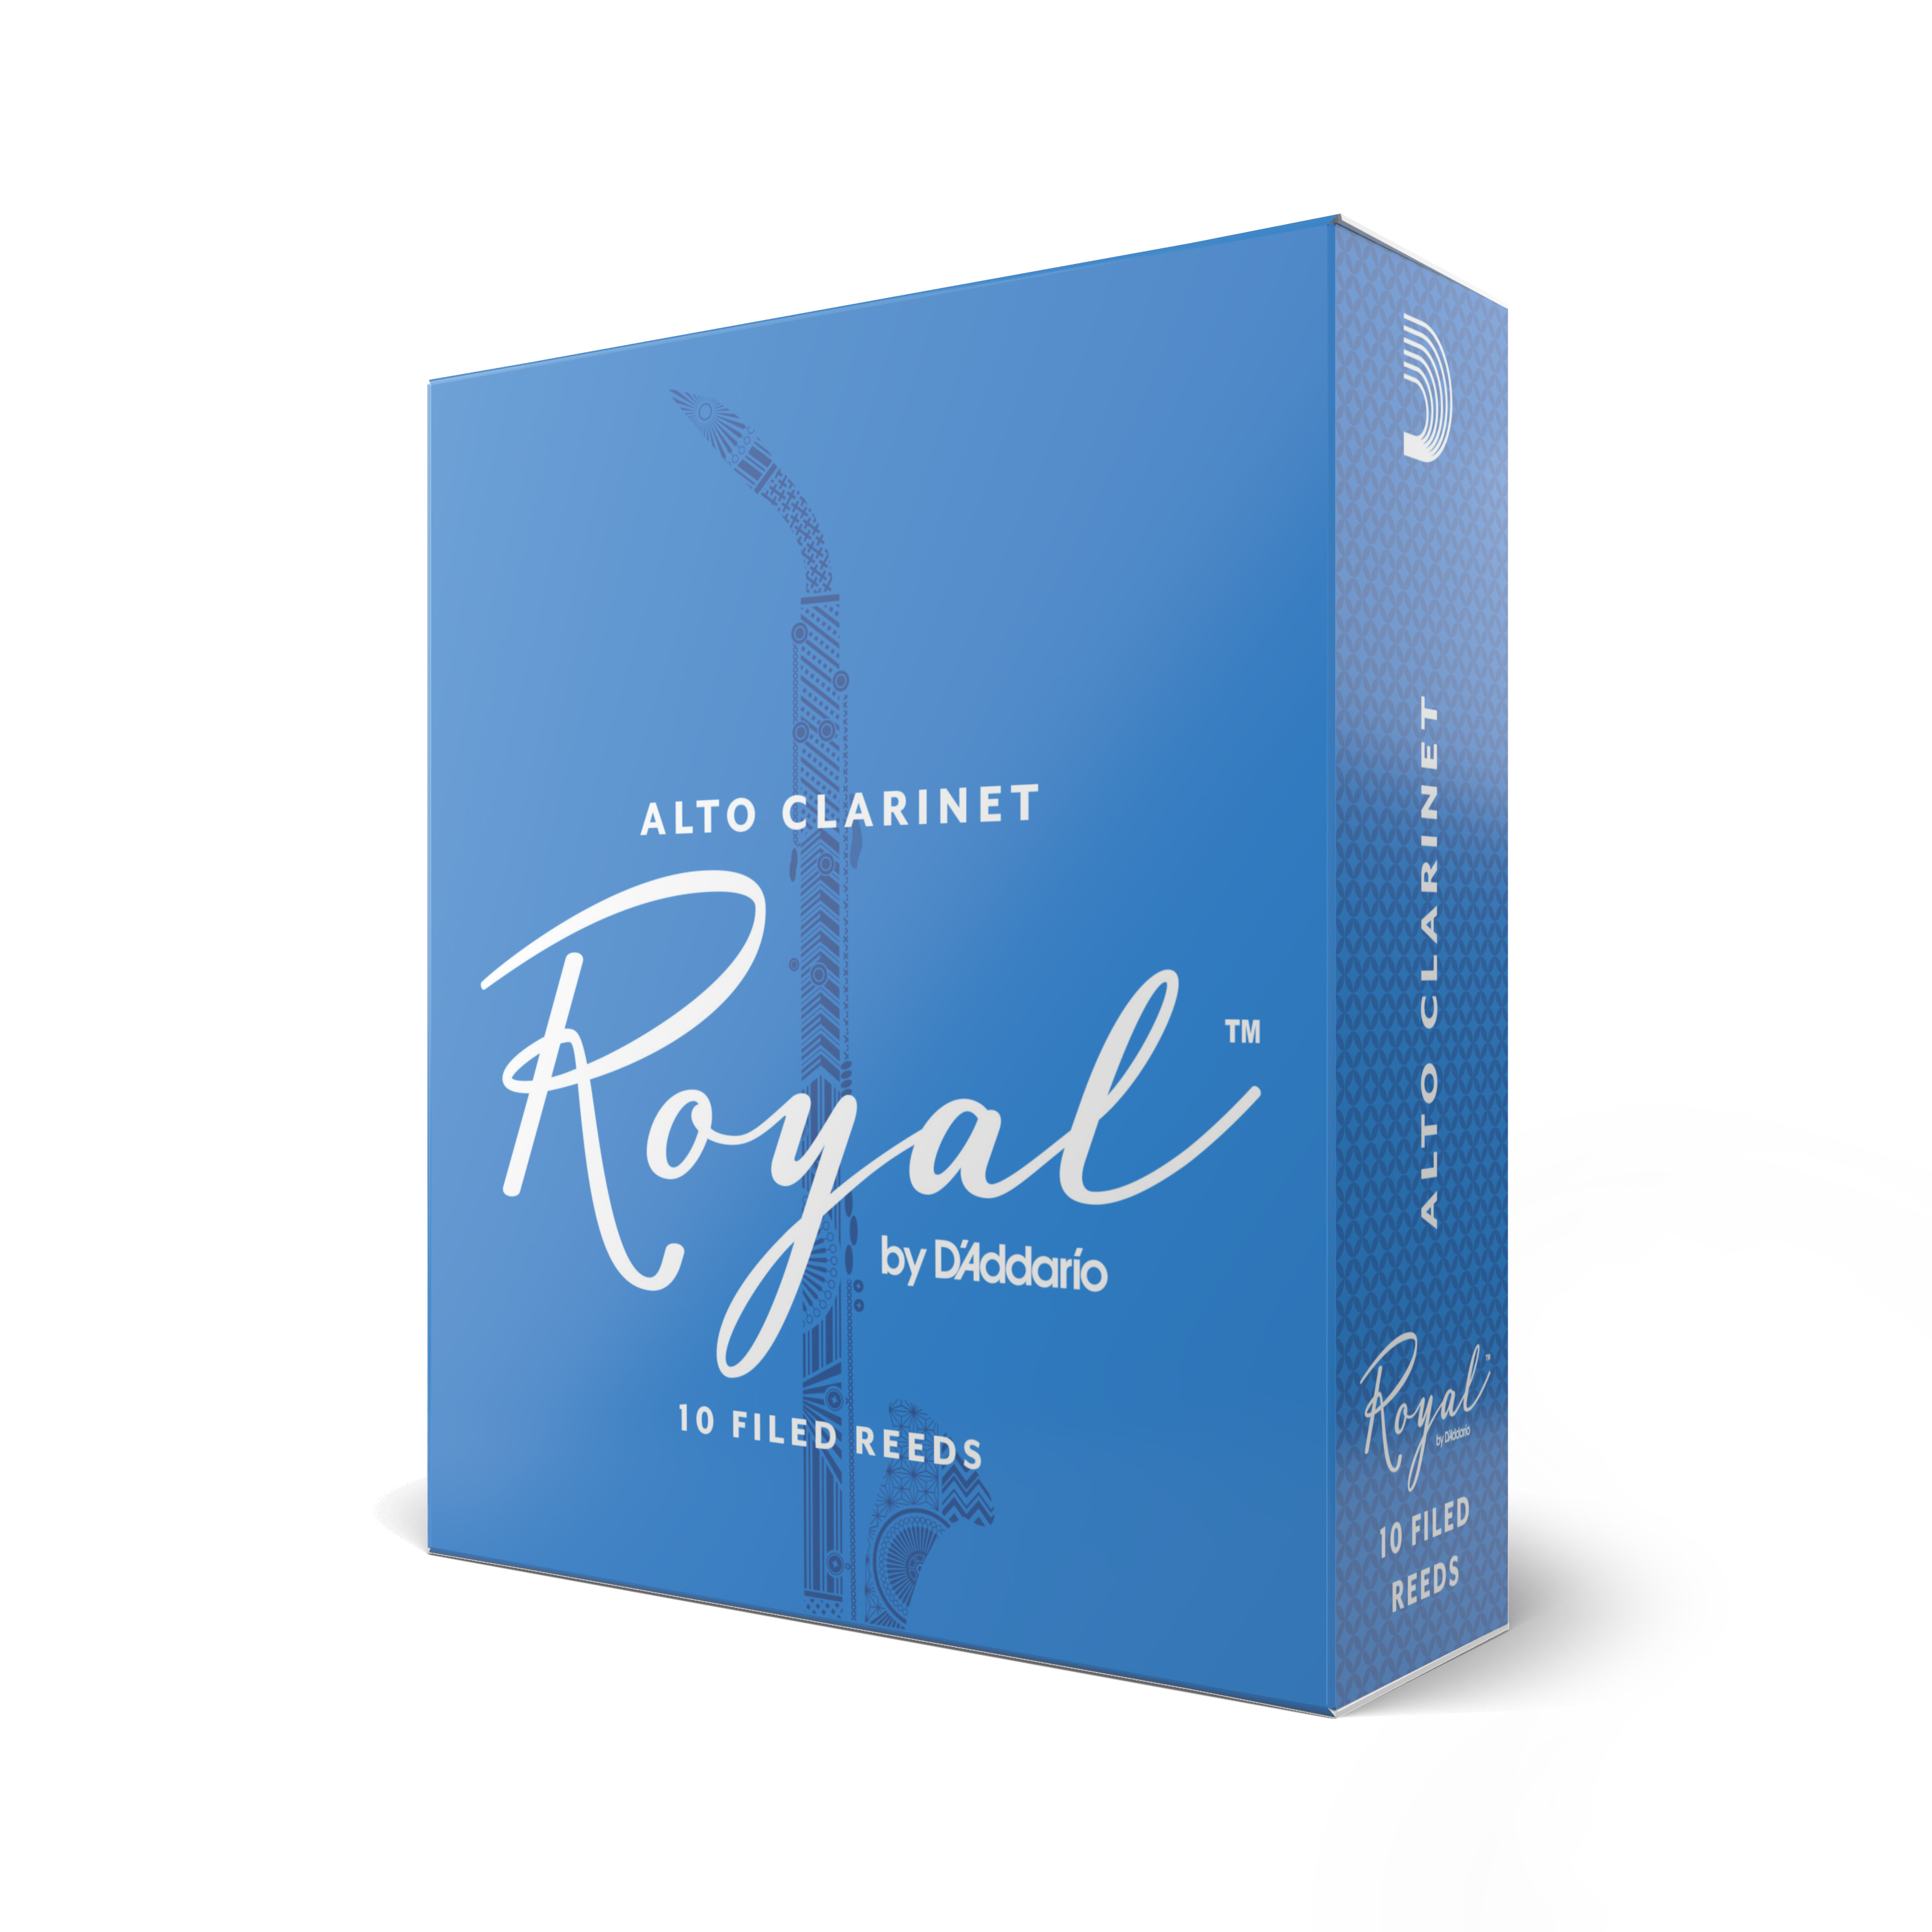 Blue Box of Ten Royal by D'addario Alto Clarinet Reeds